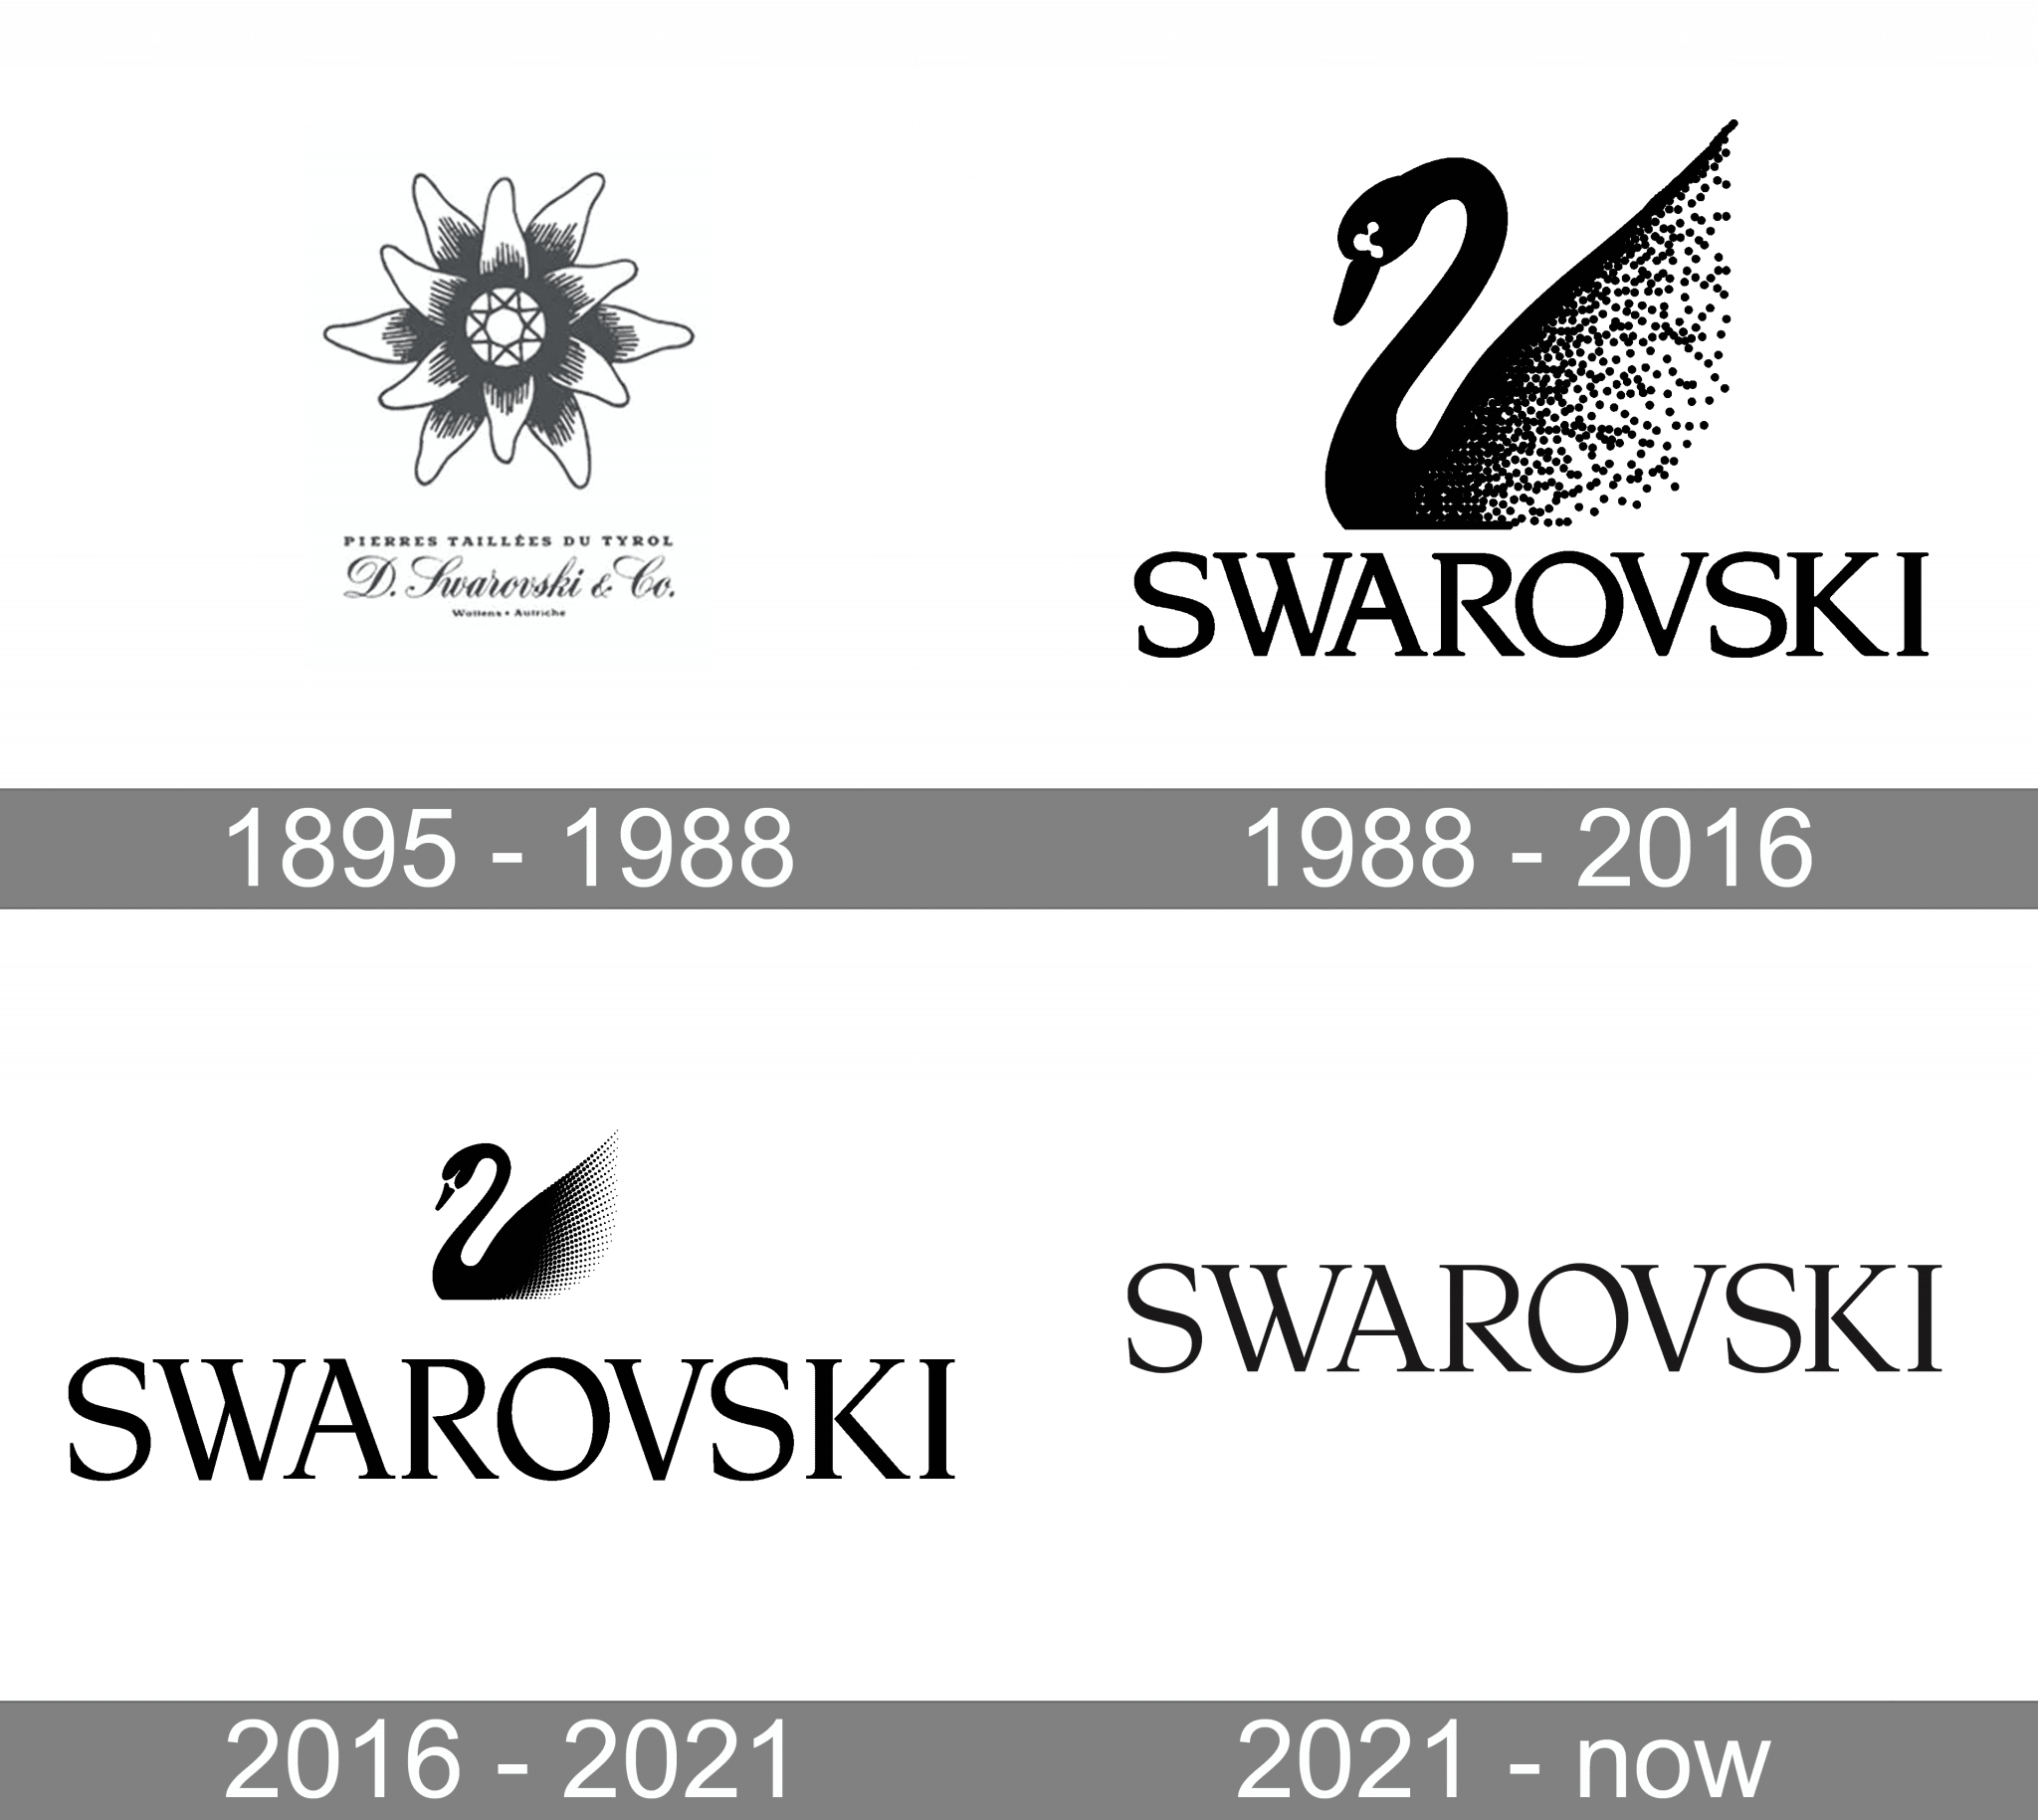 Swarovski Logo and symbol, meaning, history, PNG, brand